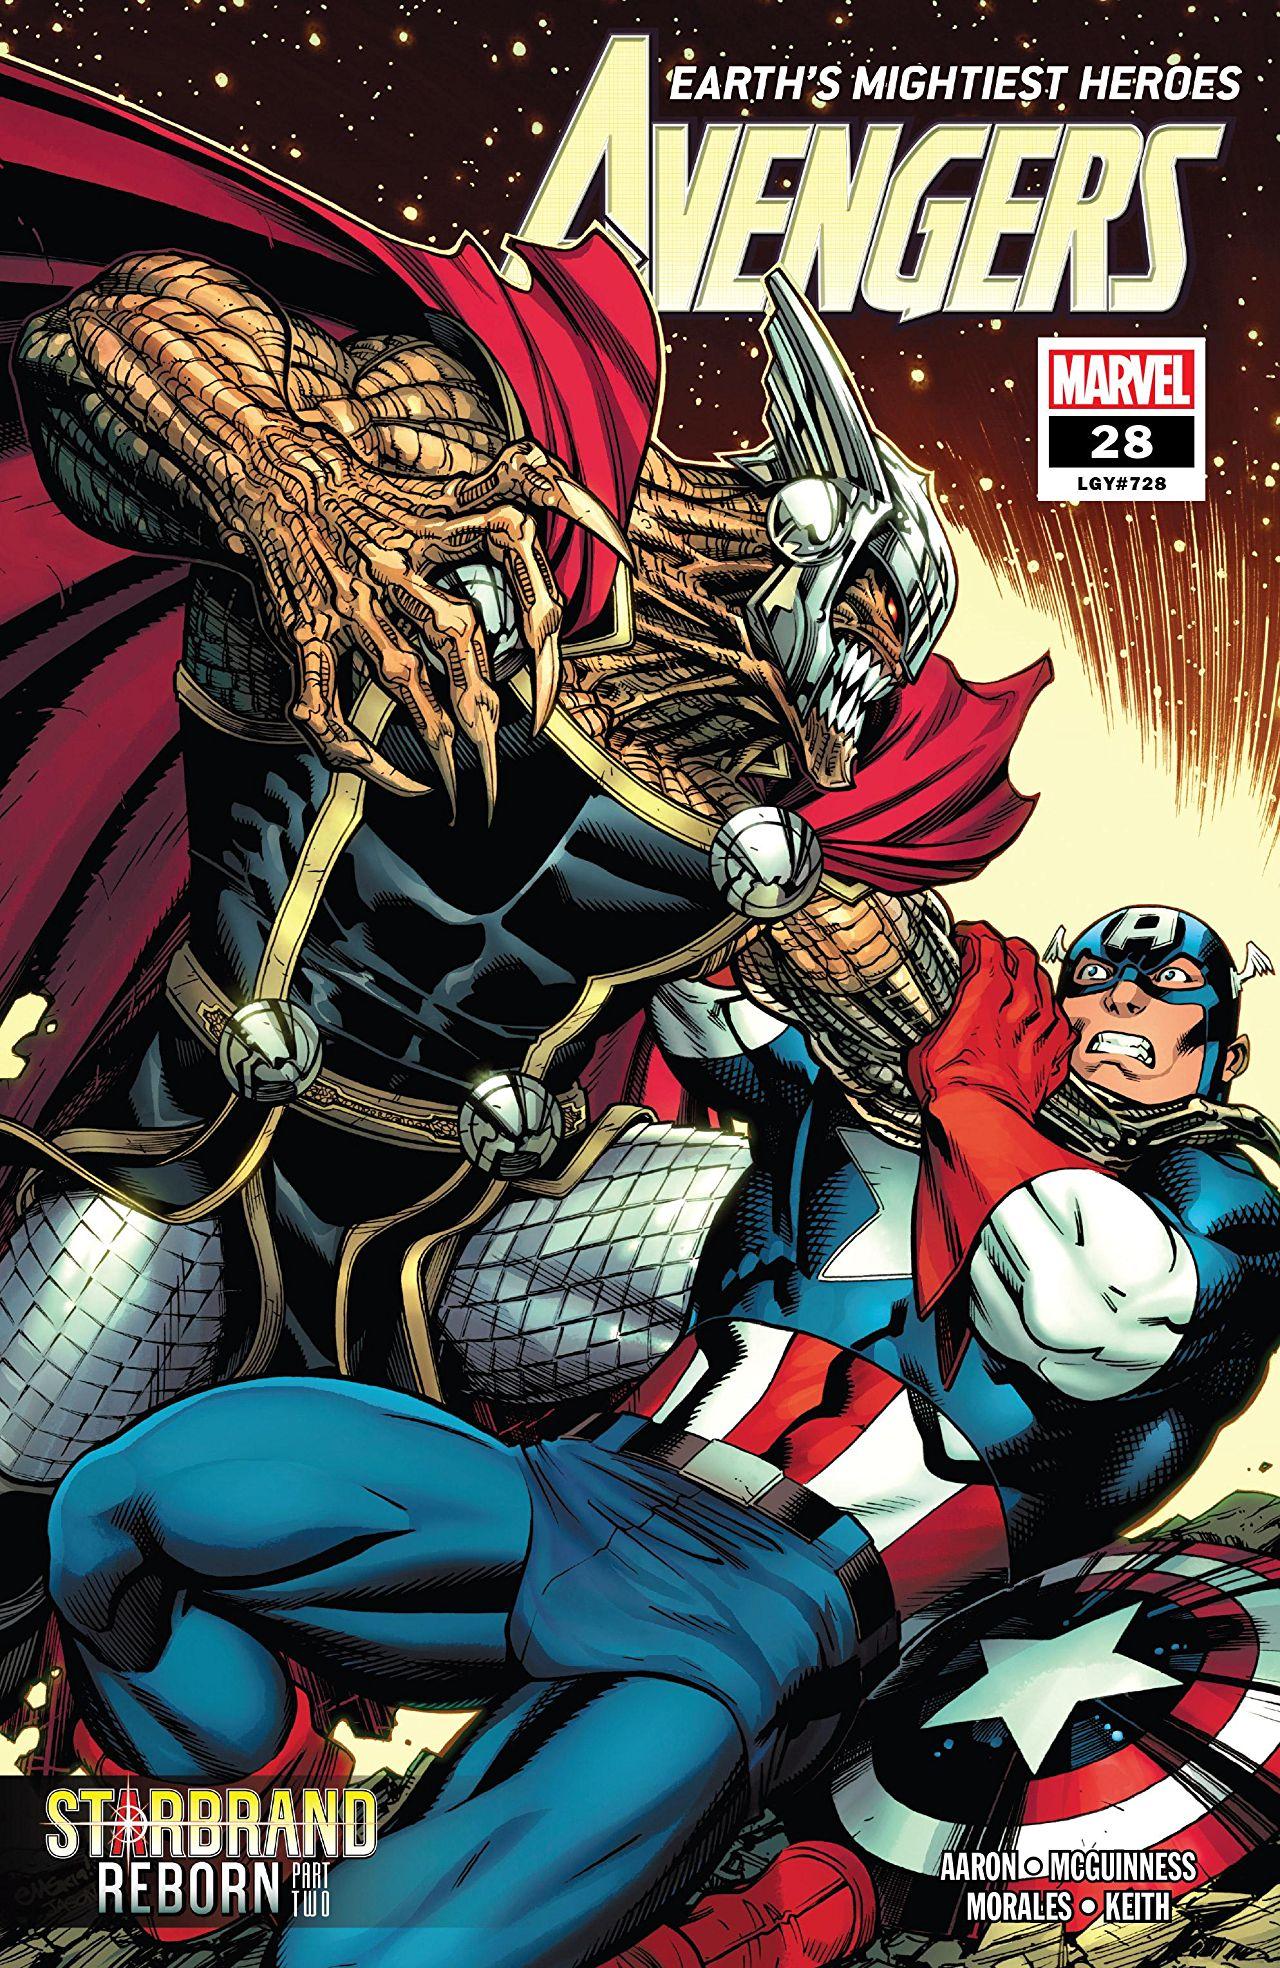 The Avengers Vol. 8 #28